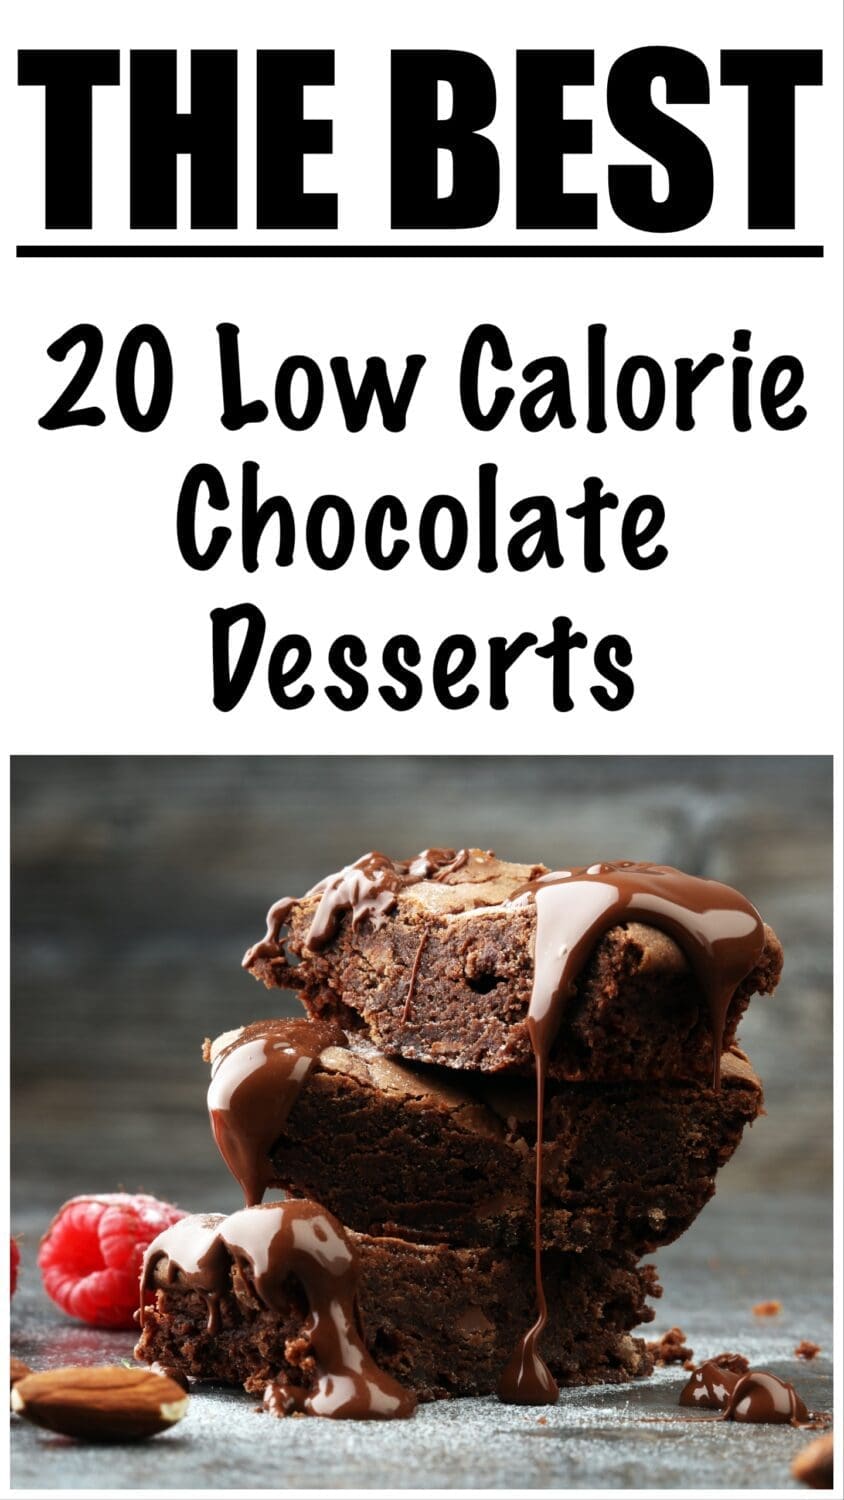 Low Calorie Chocolate Desserts